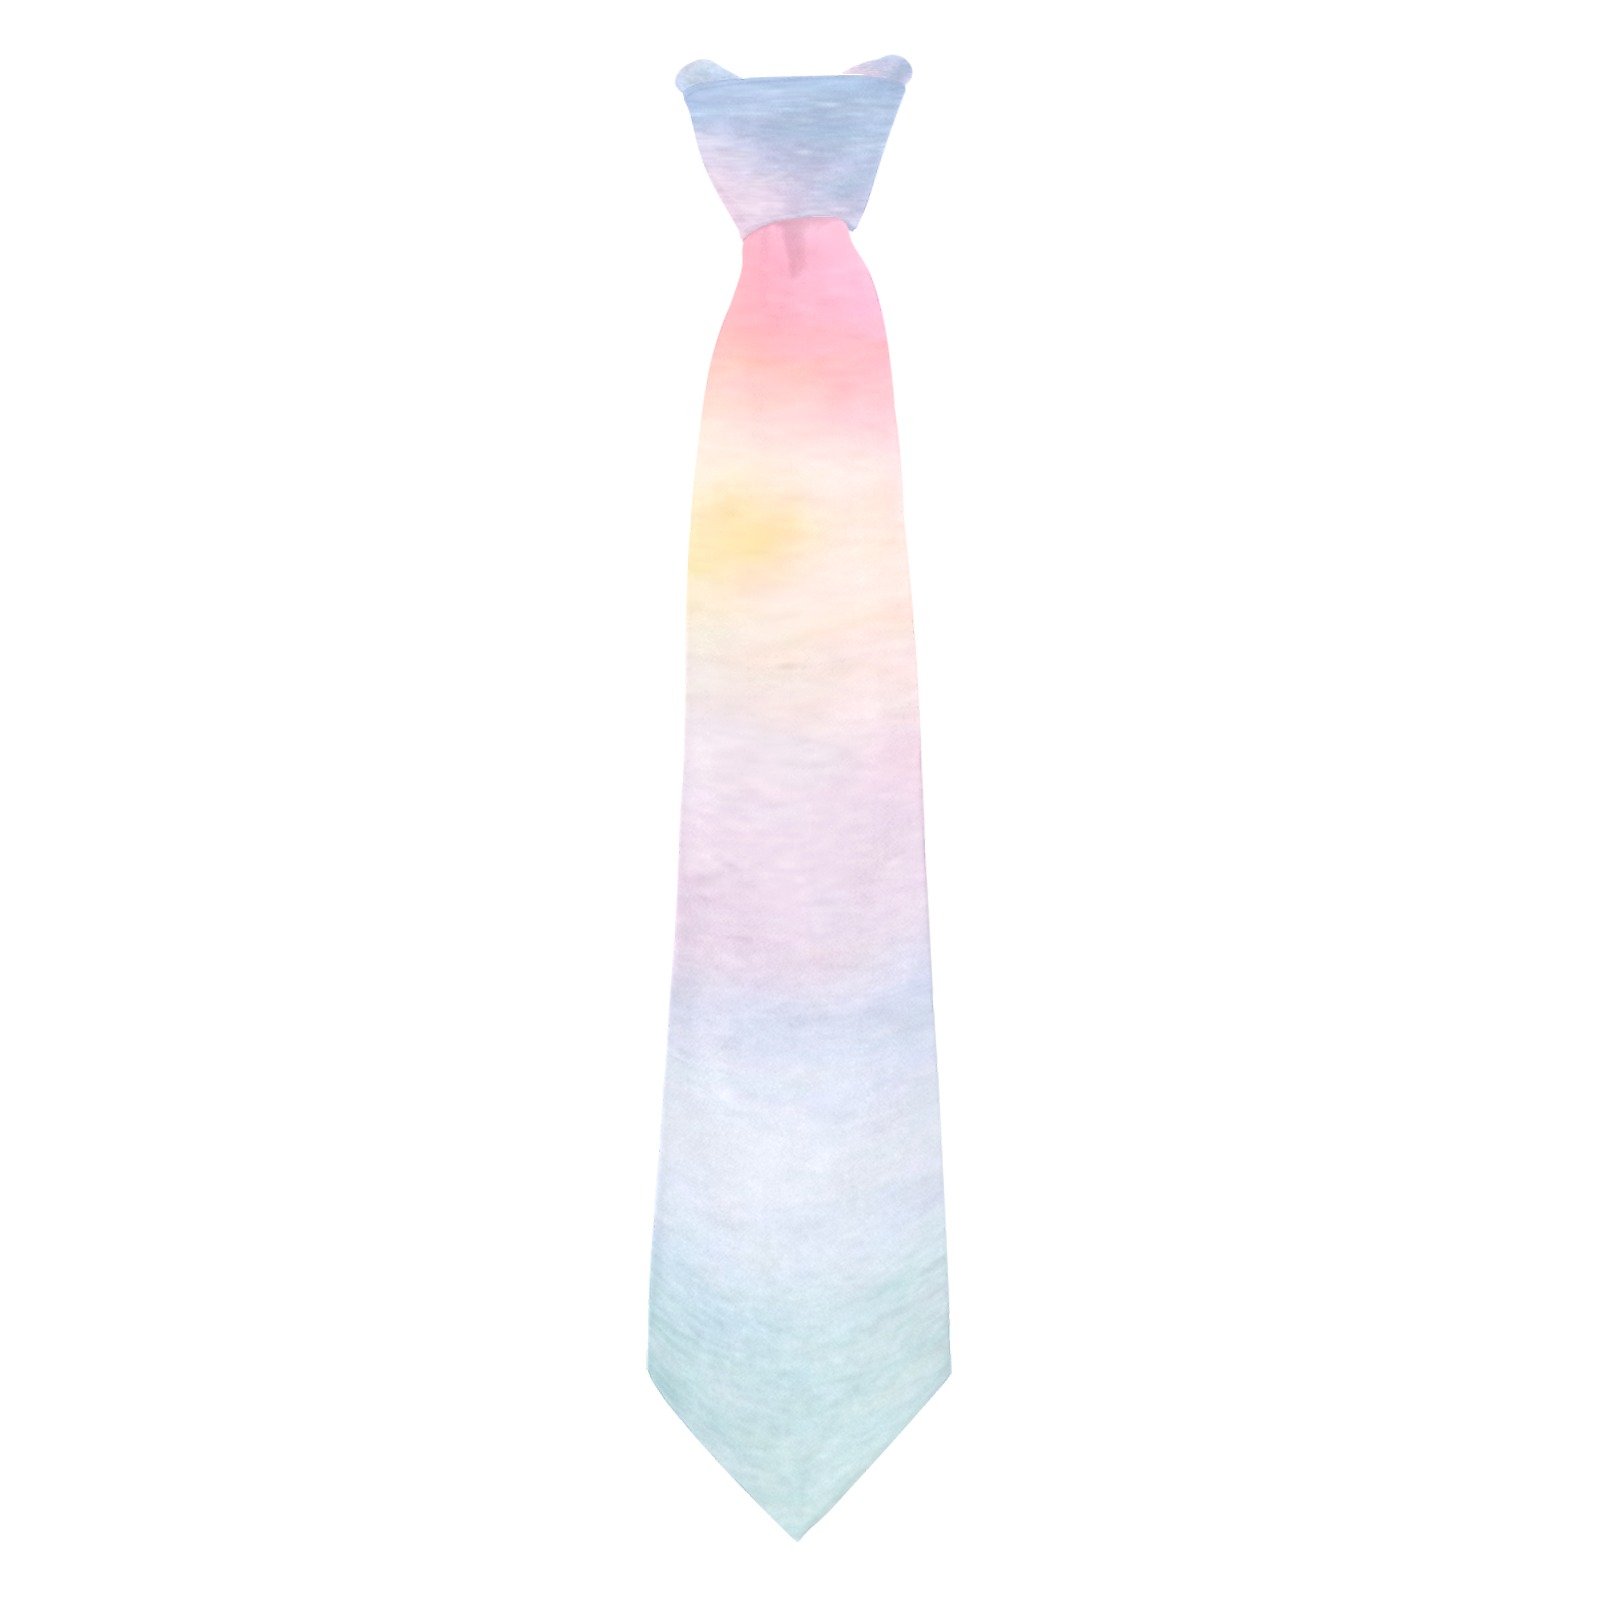 Colorful watercolor Custom Peekaboo Tie with Hidden Picture